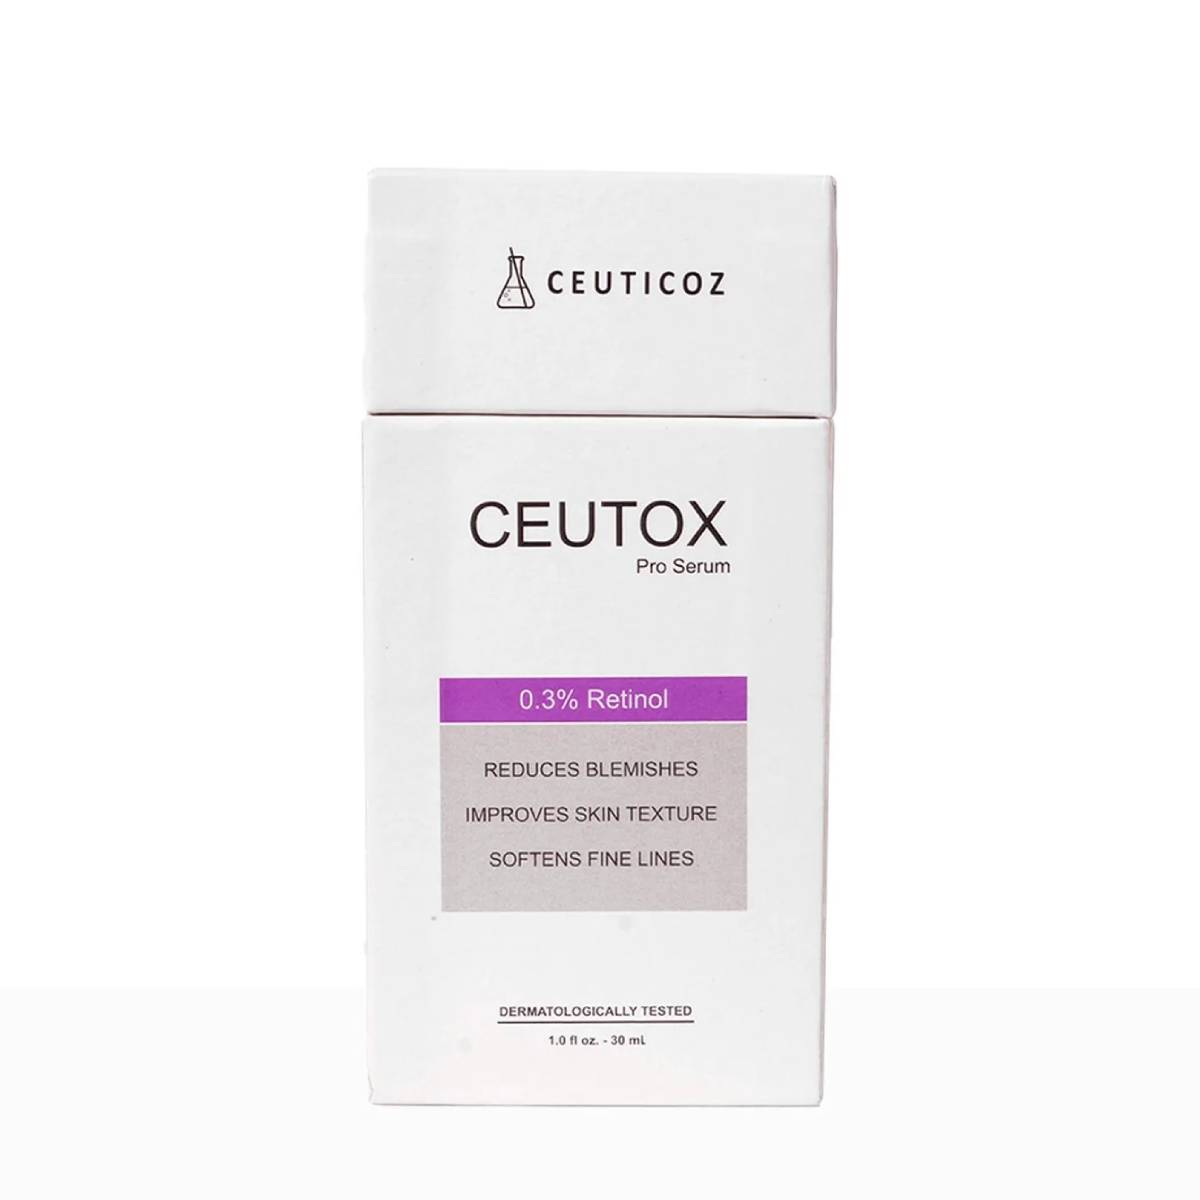 Ceutox Pro Retinol 0.3% Serum